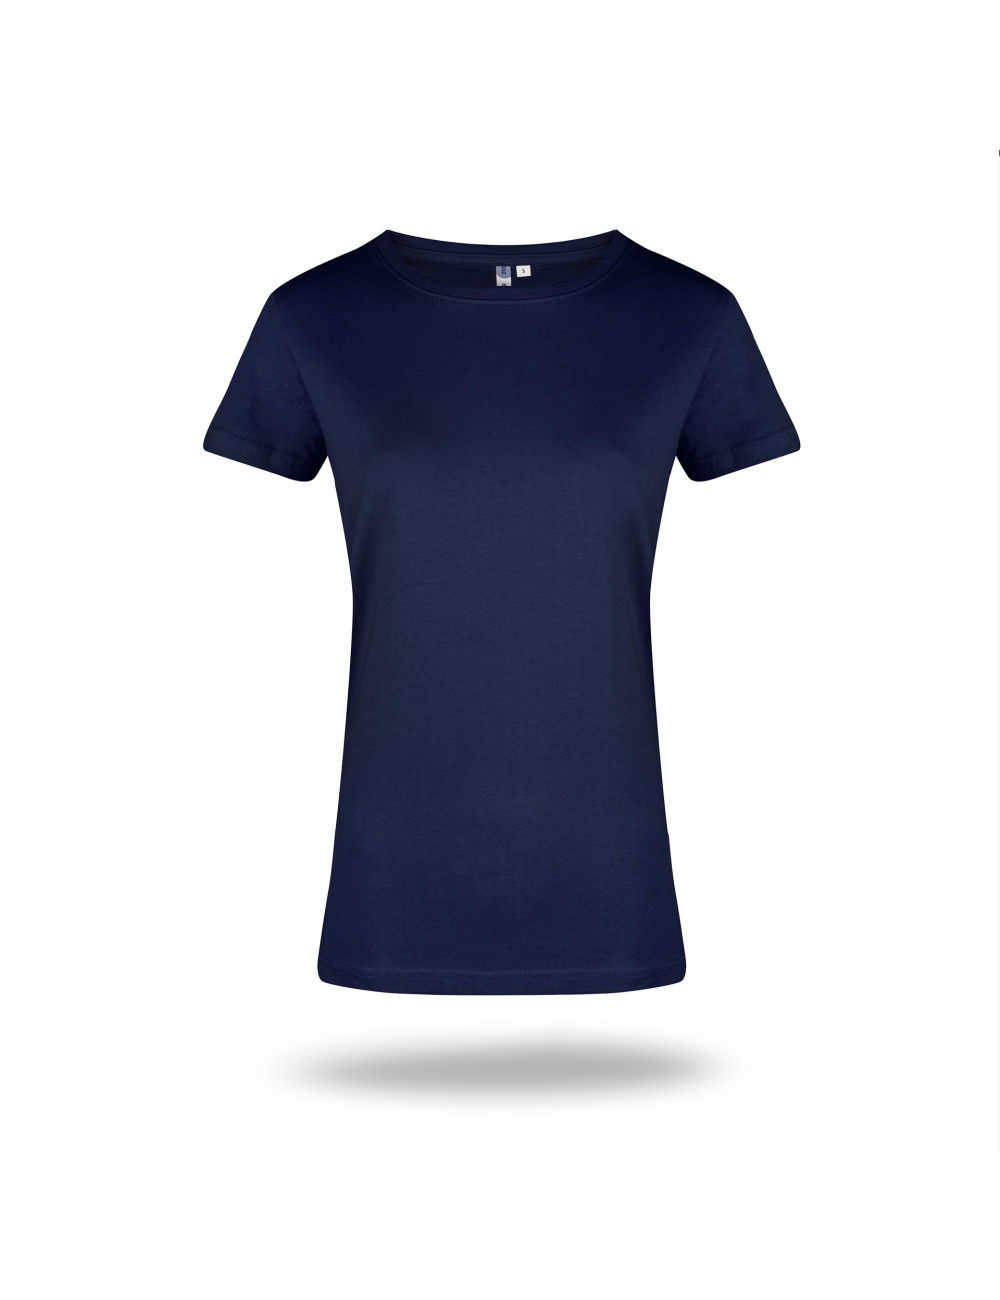 T-shirt for women 205 navy Geffer